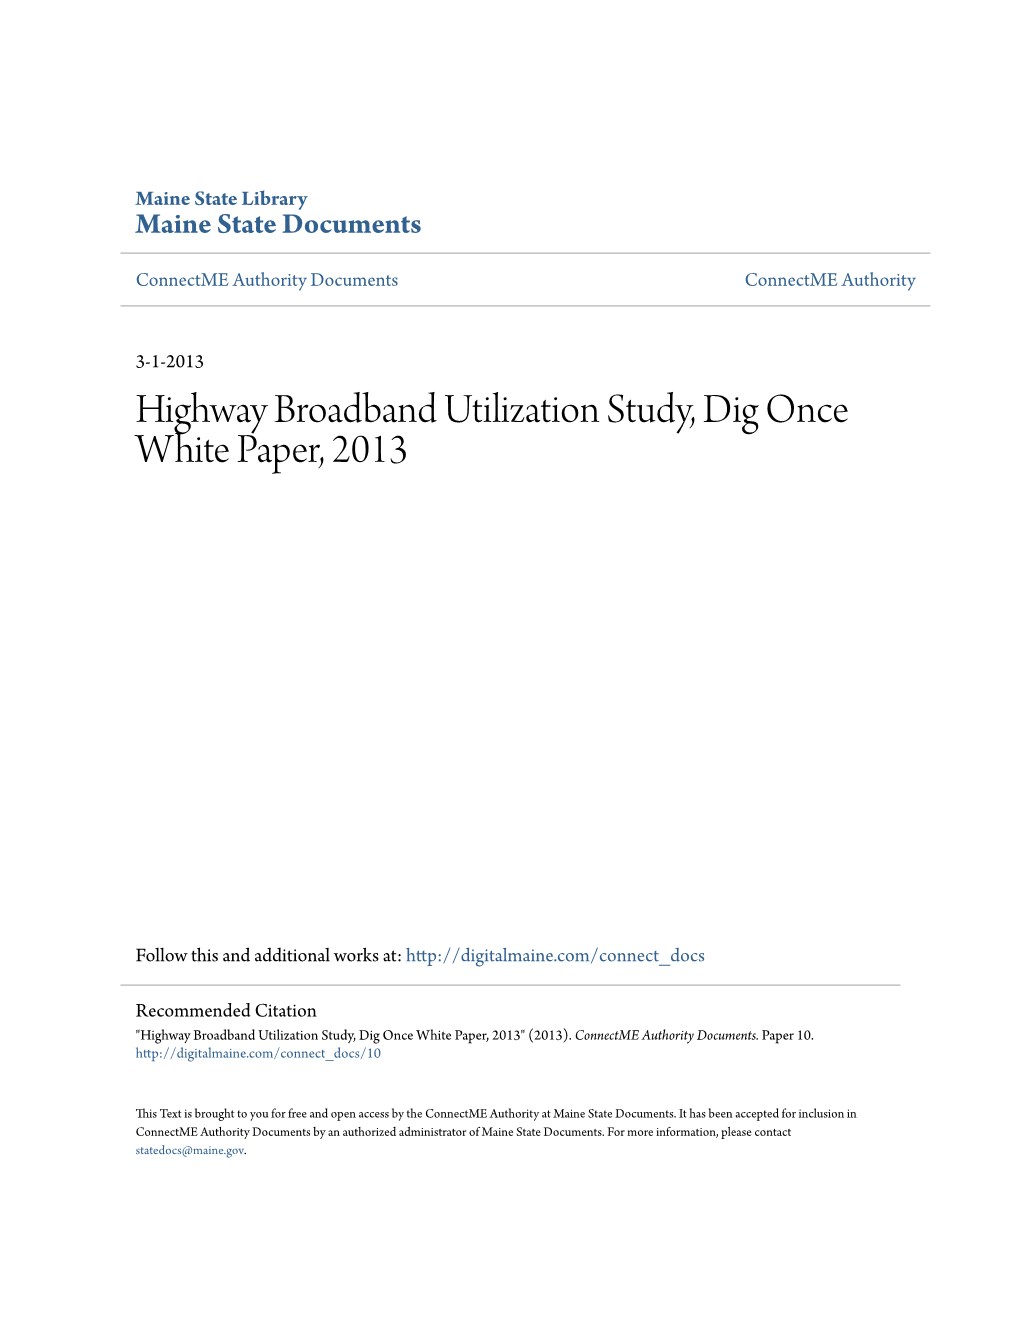 Highway Broadband Utilization Study, Dig Once White Paper, 2013